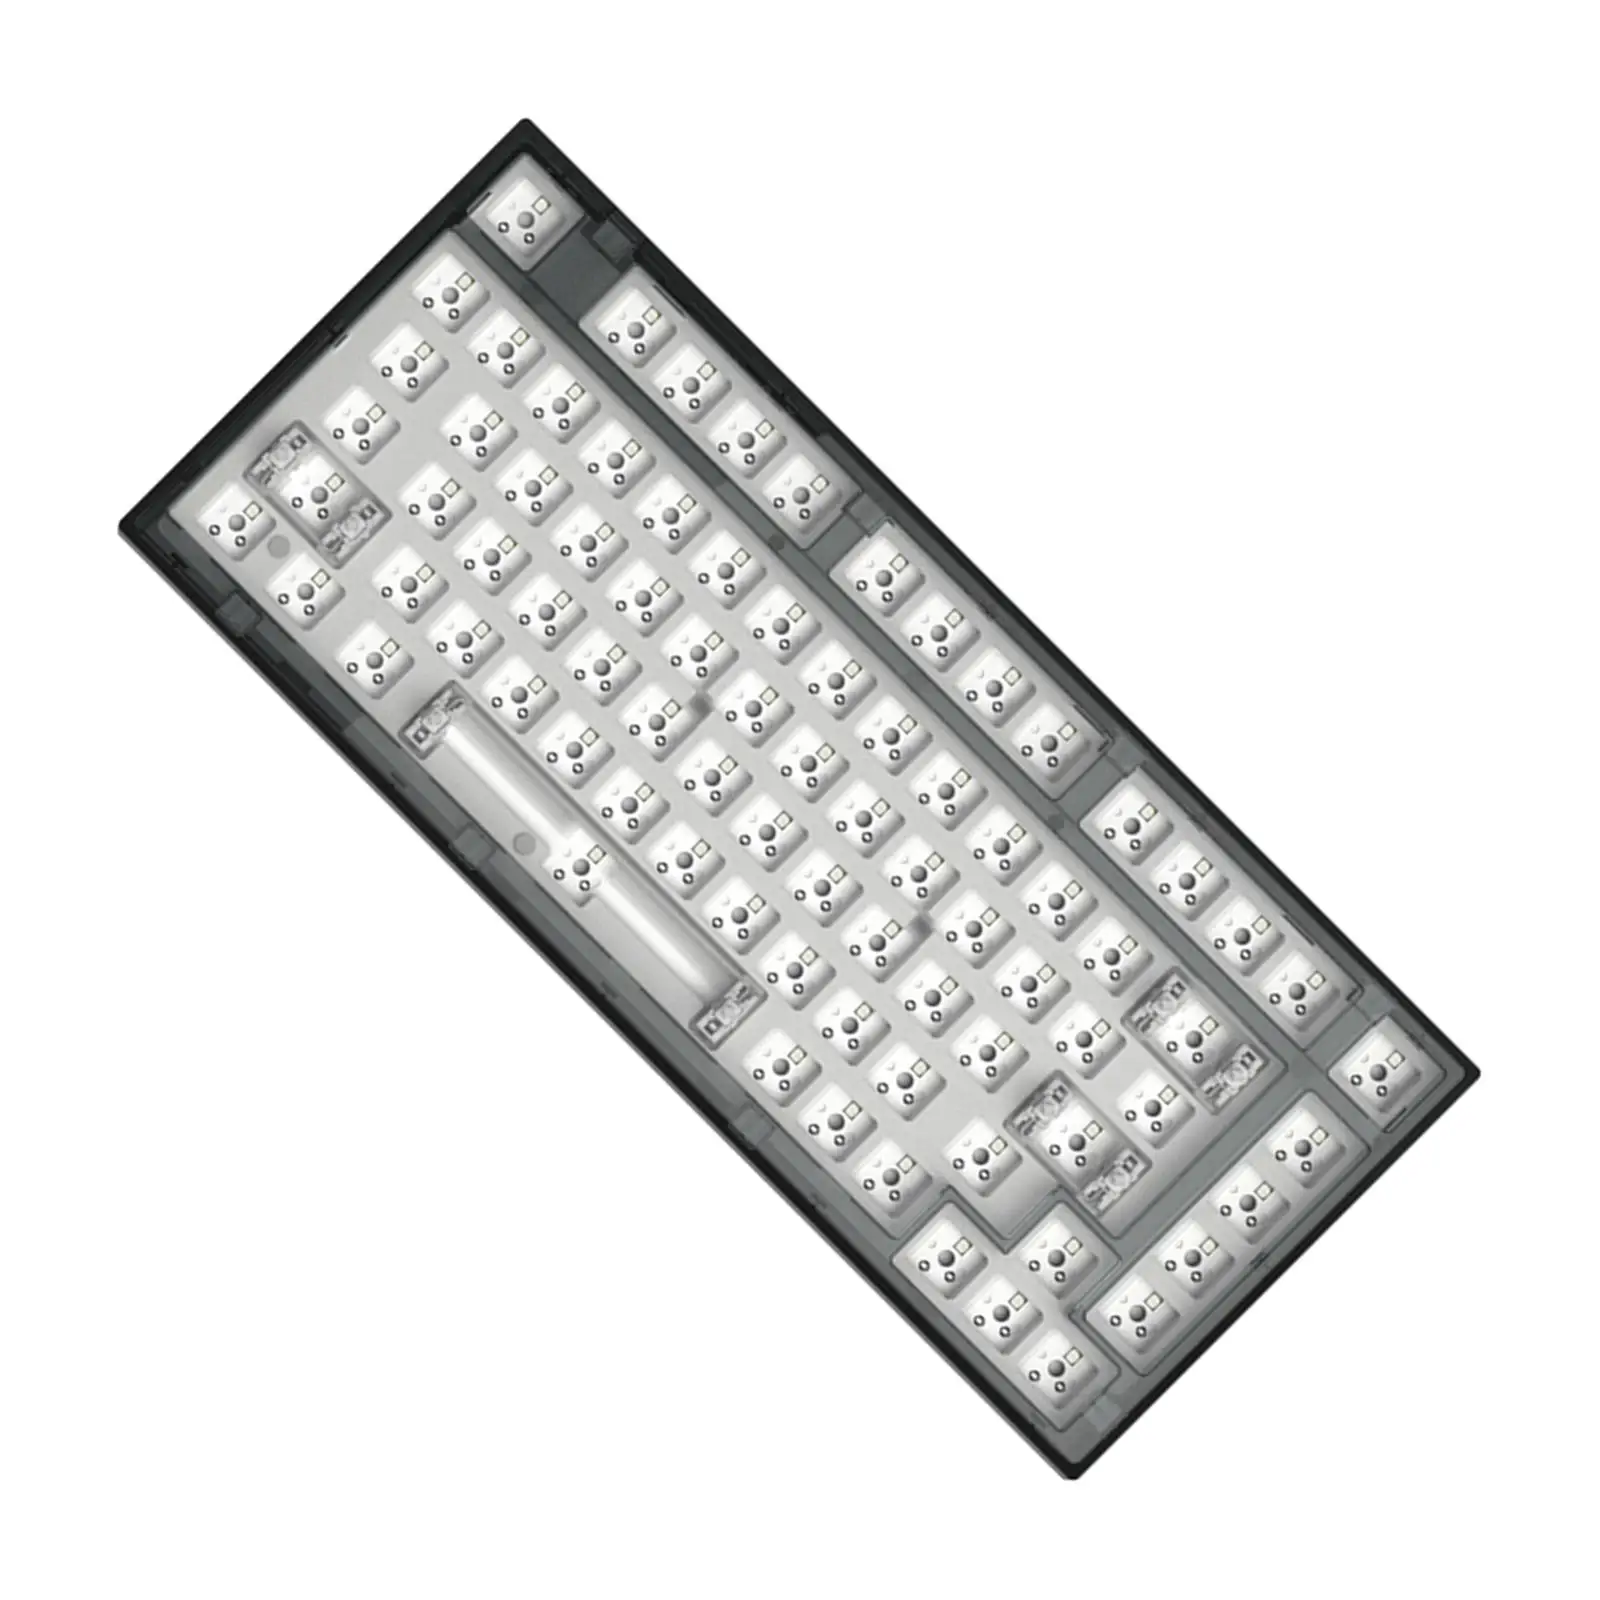 Q75 Mechanical Keyboard Kit 82 Key PCB Design Tyce-C Interface Hot-Swappable RGB Backlit Keyboard DIY Kit for Laptop Dual System